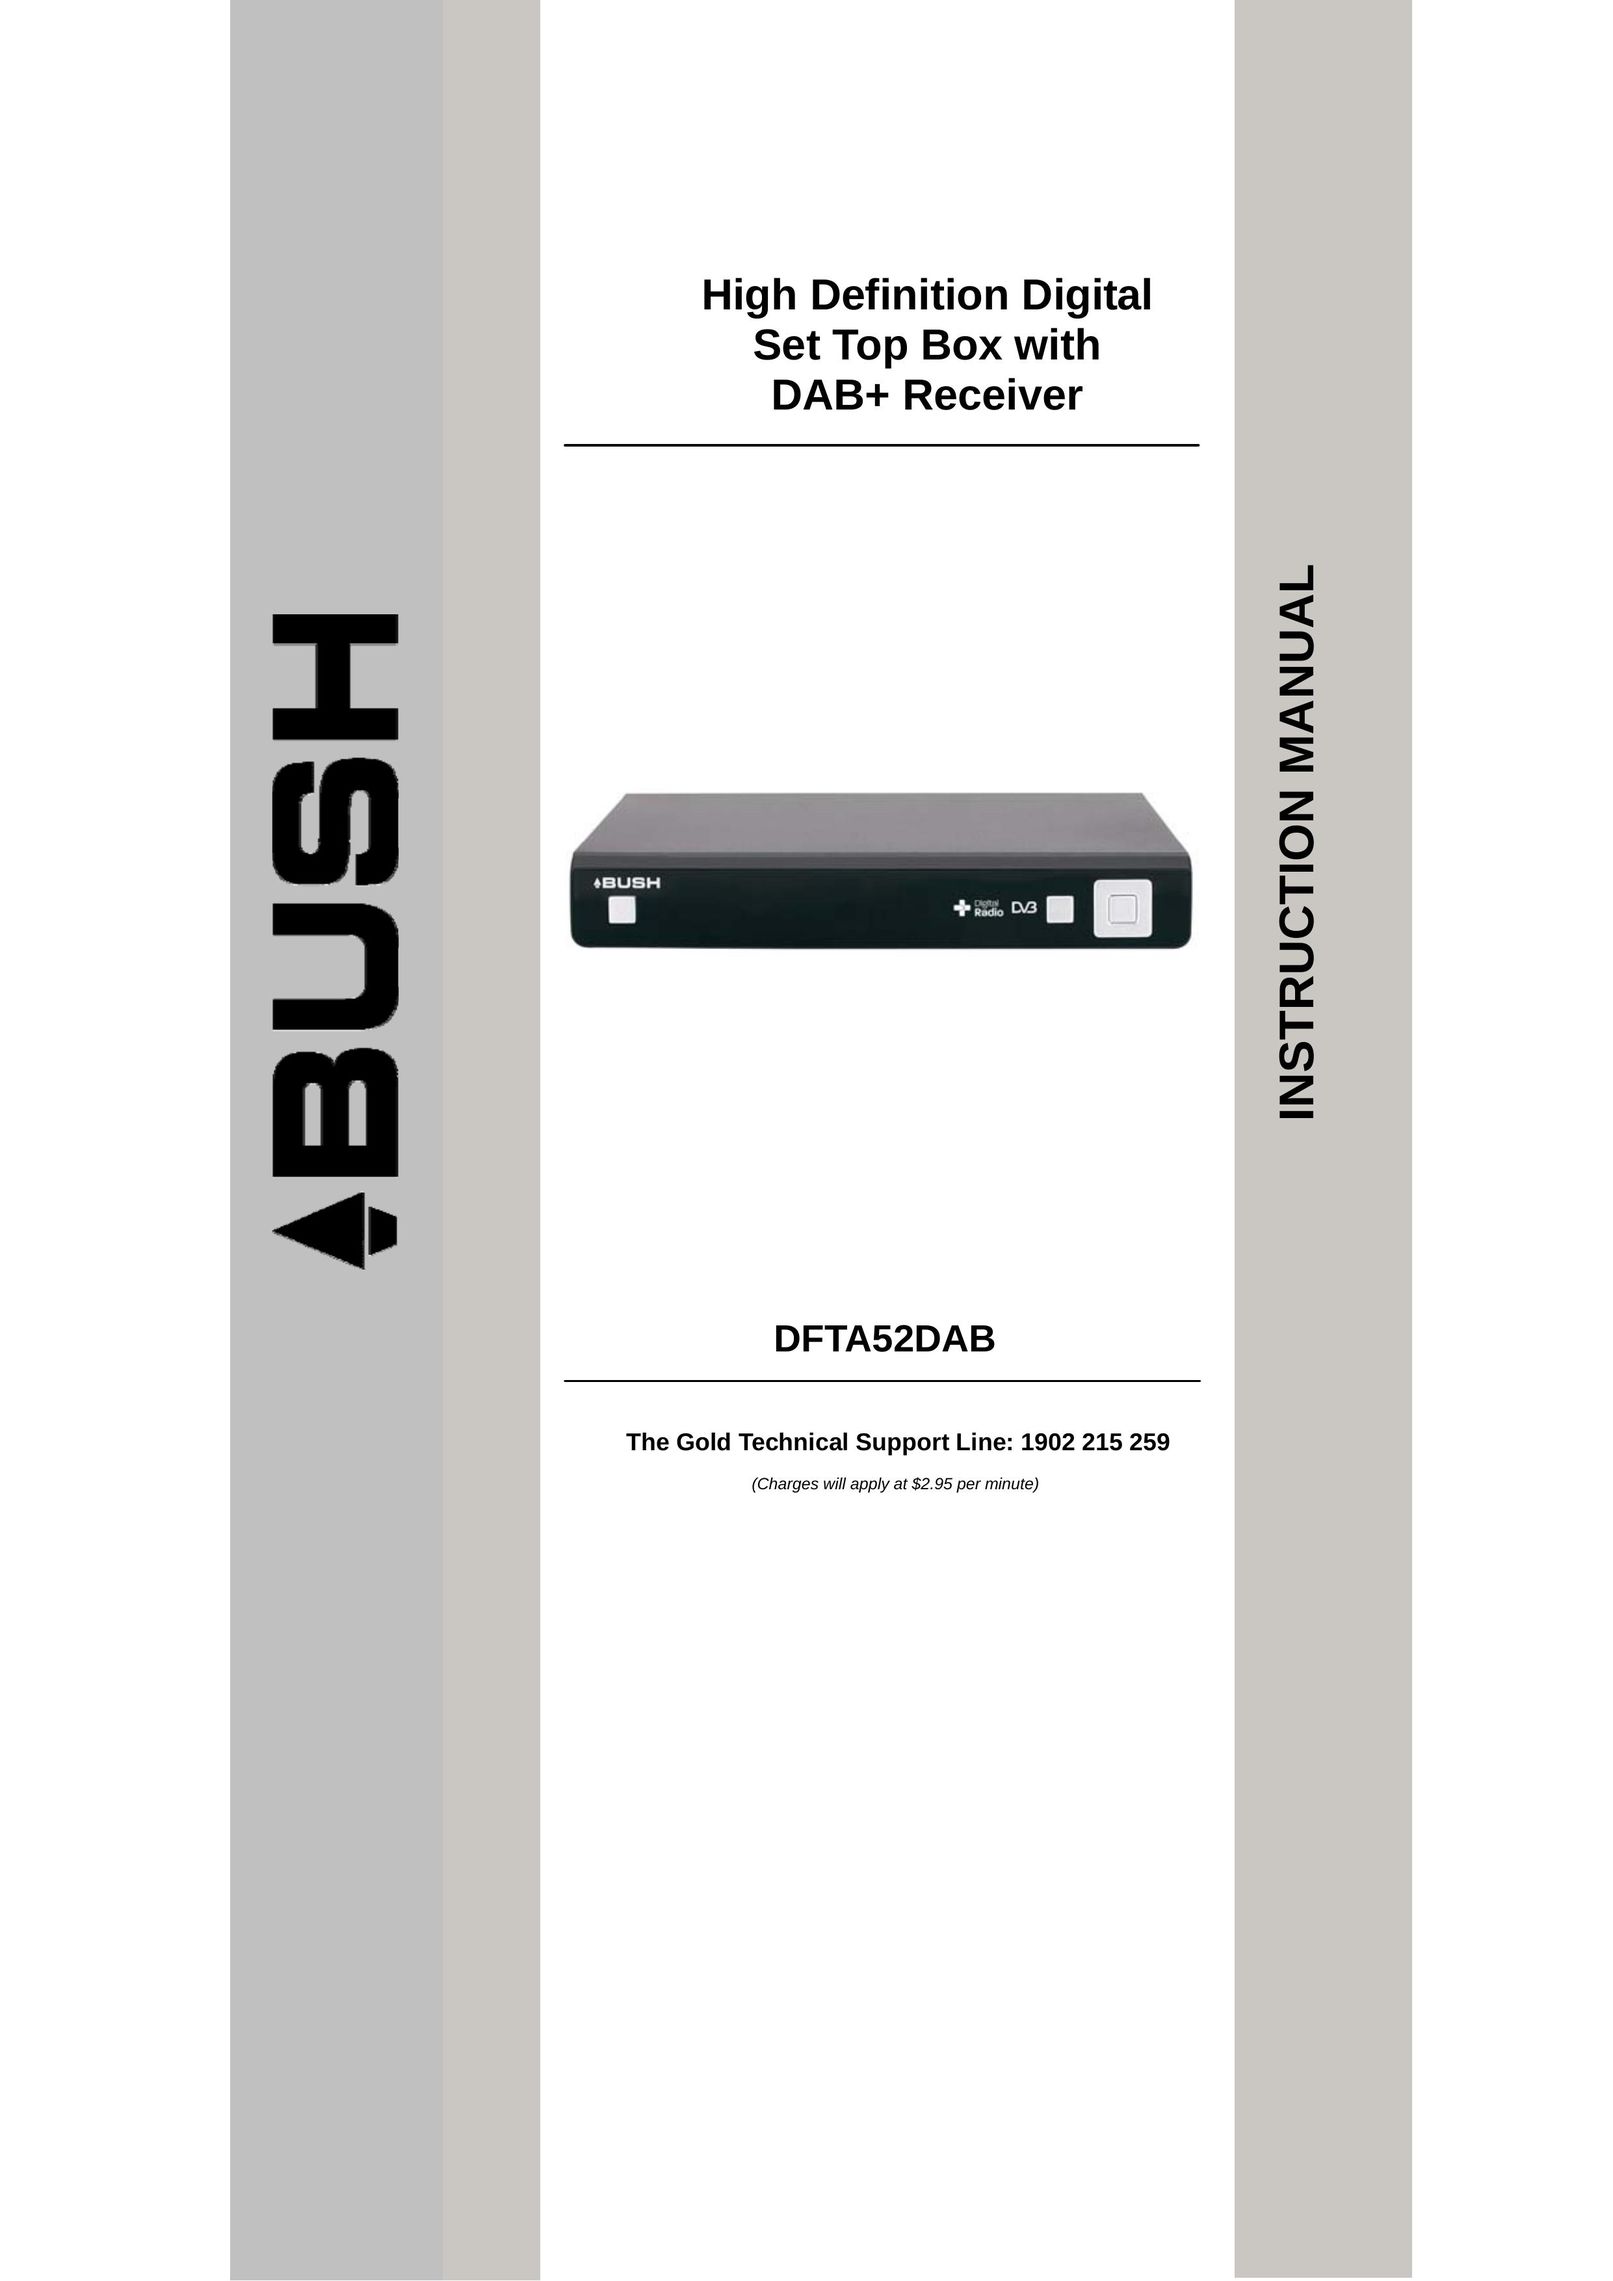 BUSH DFTA52DAB Cable Box User Manual